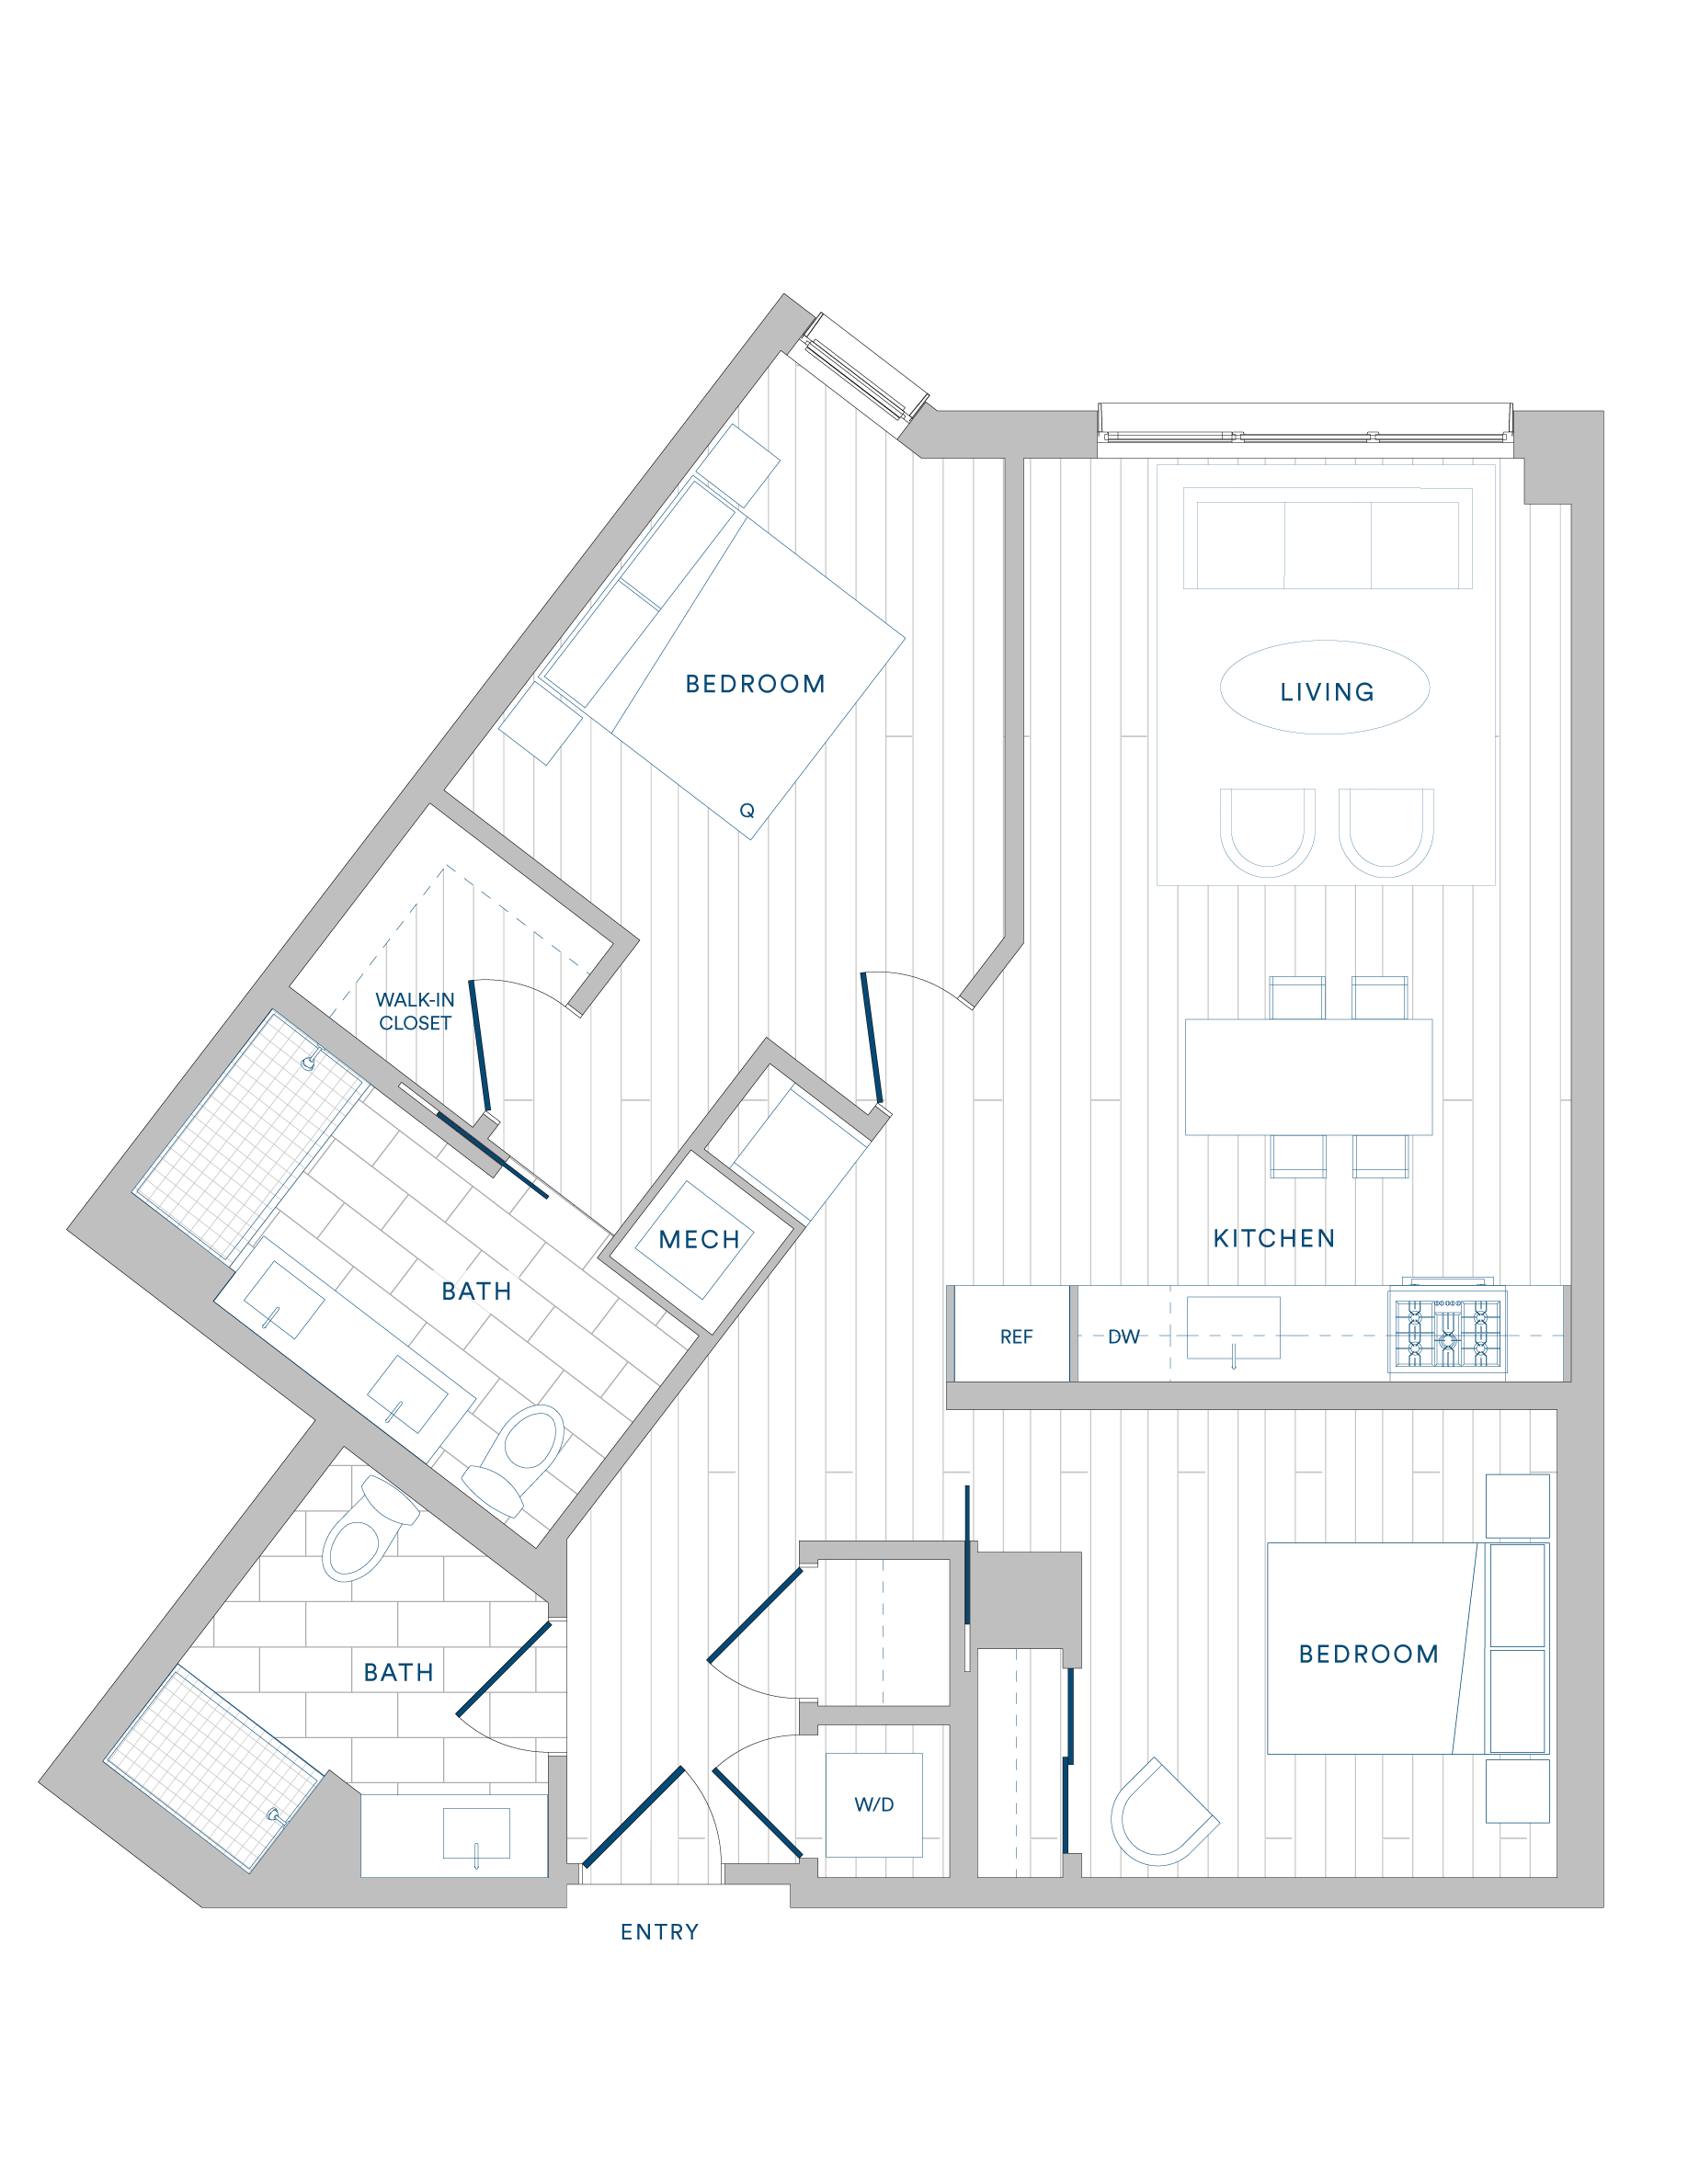 Floorplan for Apartment #802, 2 bedroom unit at Margarite